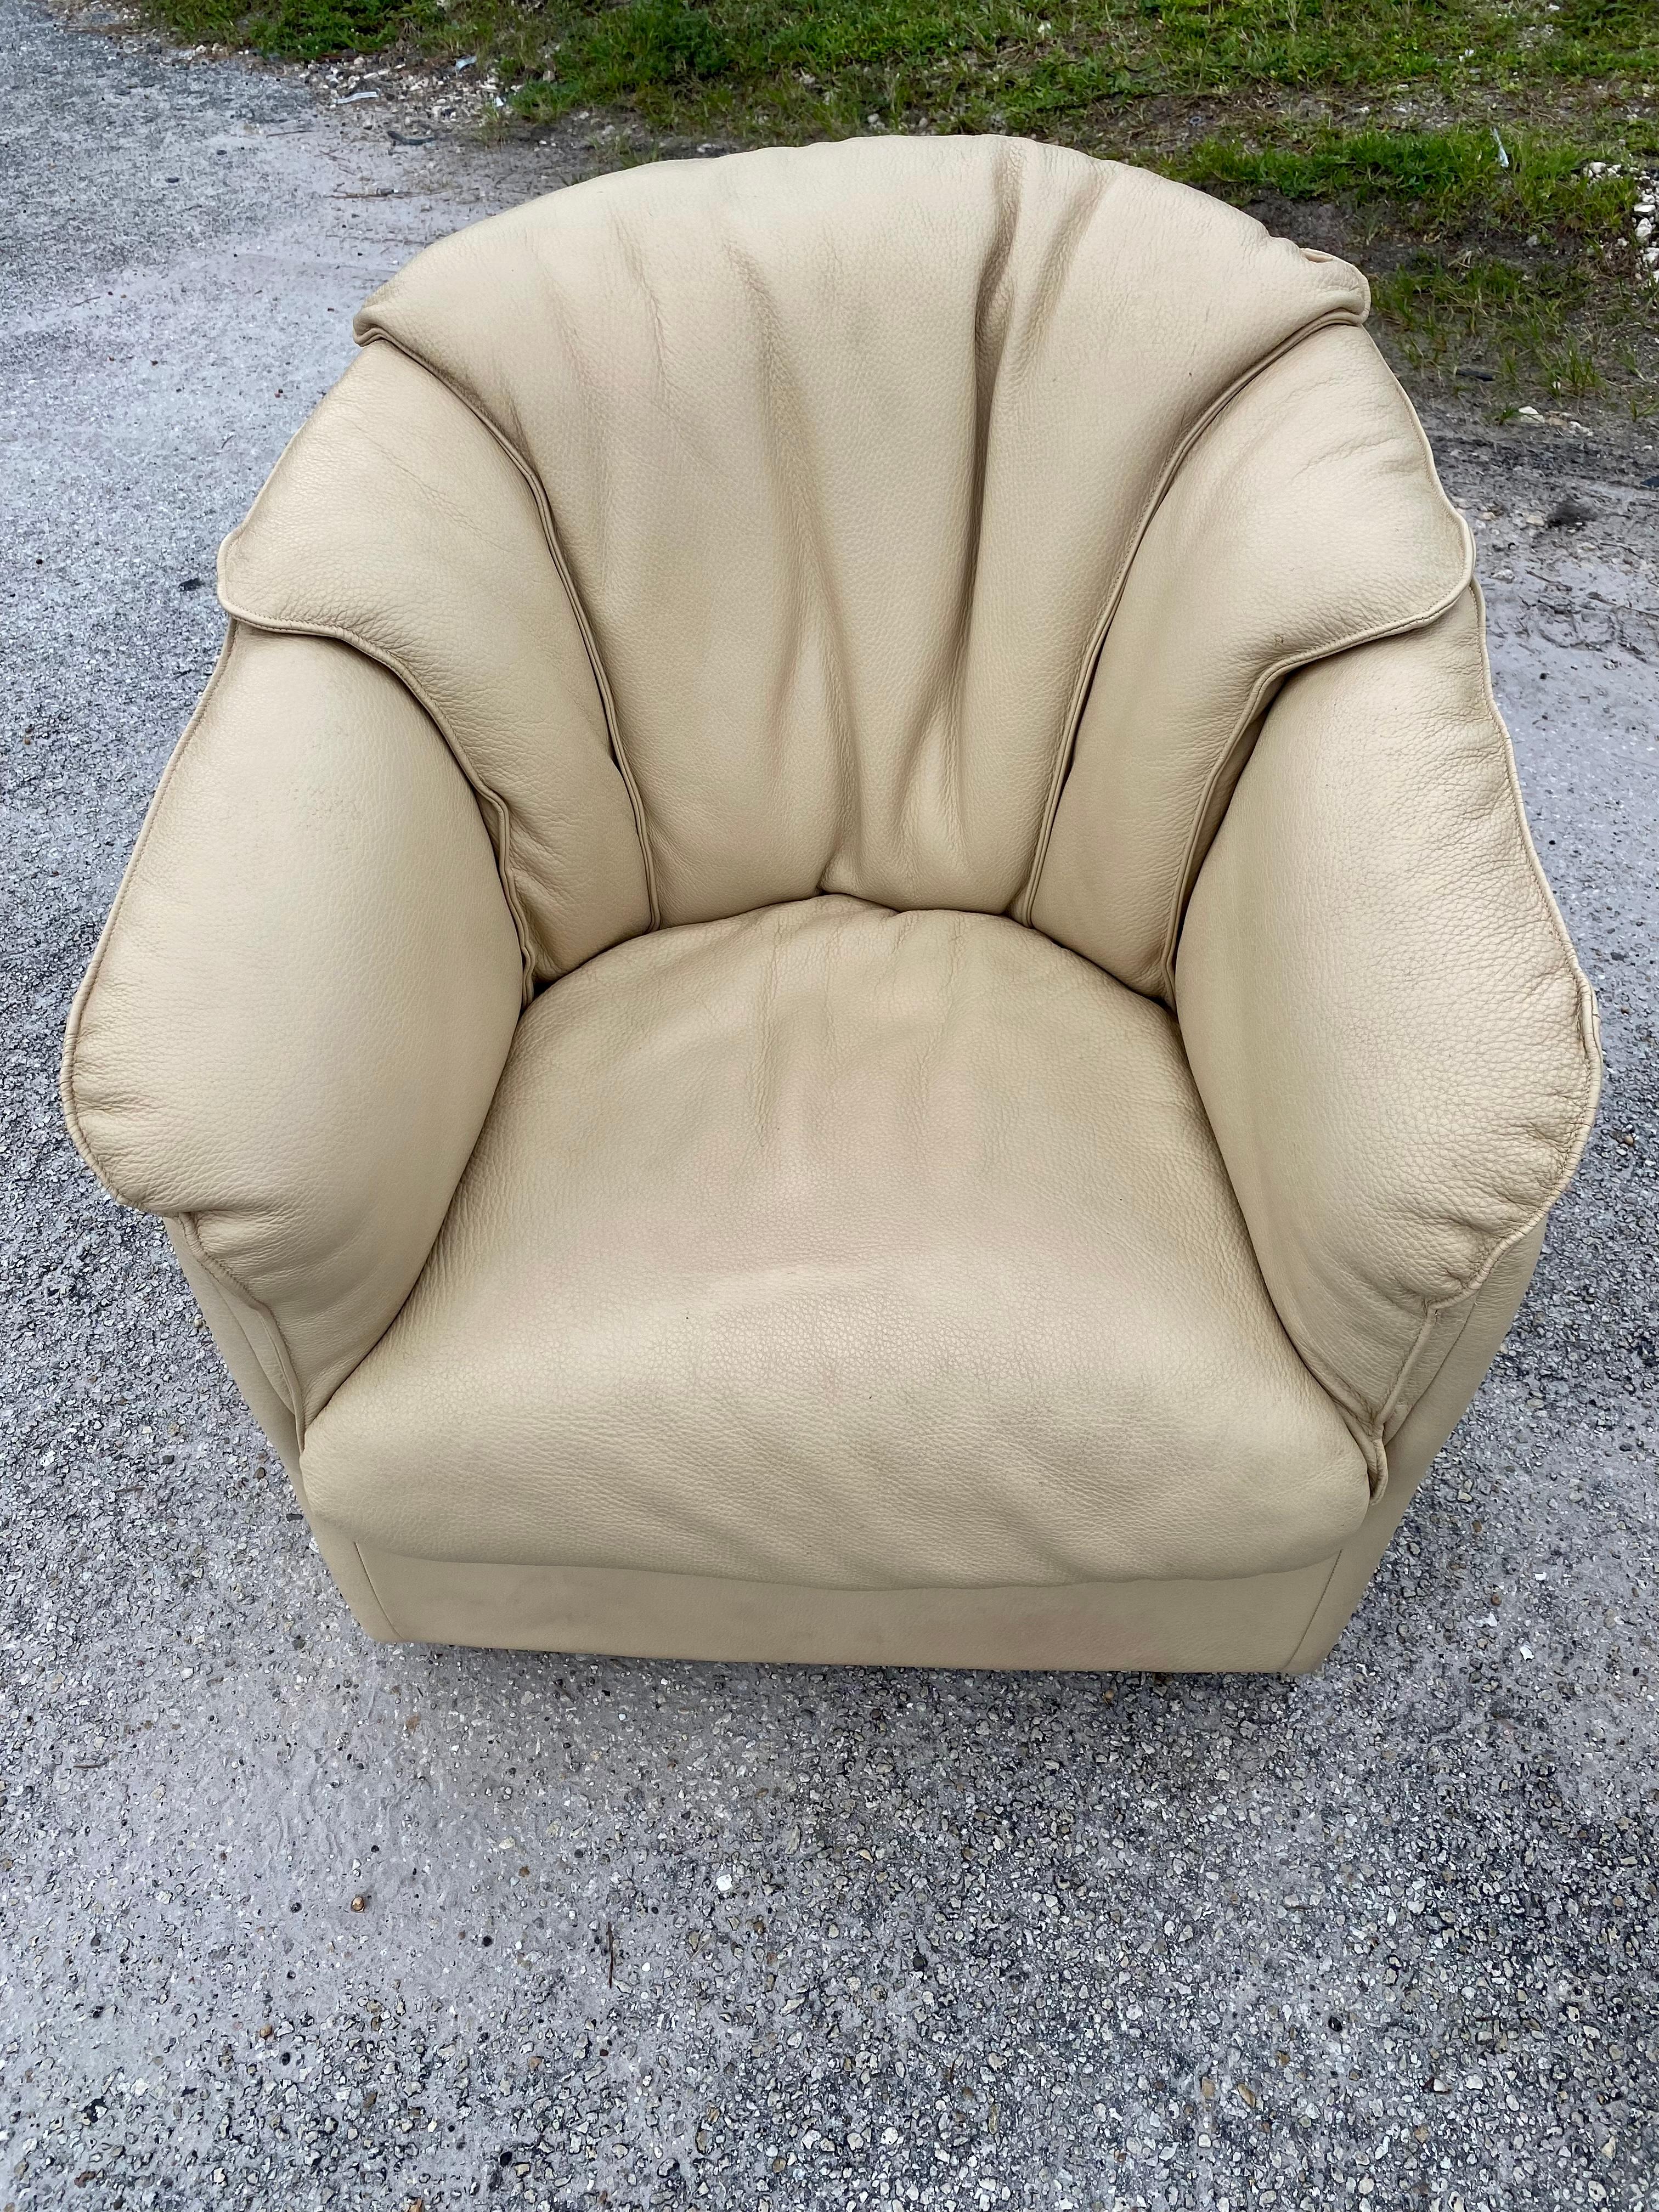 1980s Natuzzi Beige Leather Barrel Swivel Chairs, Set of 2 For Sale 2